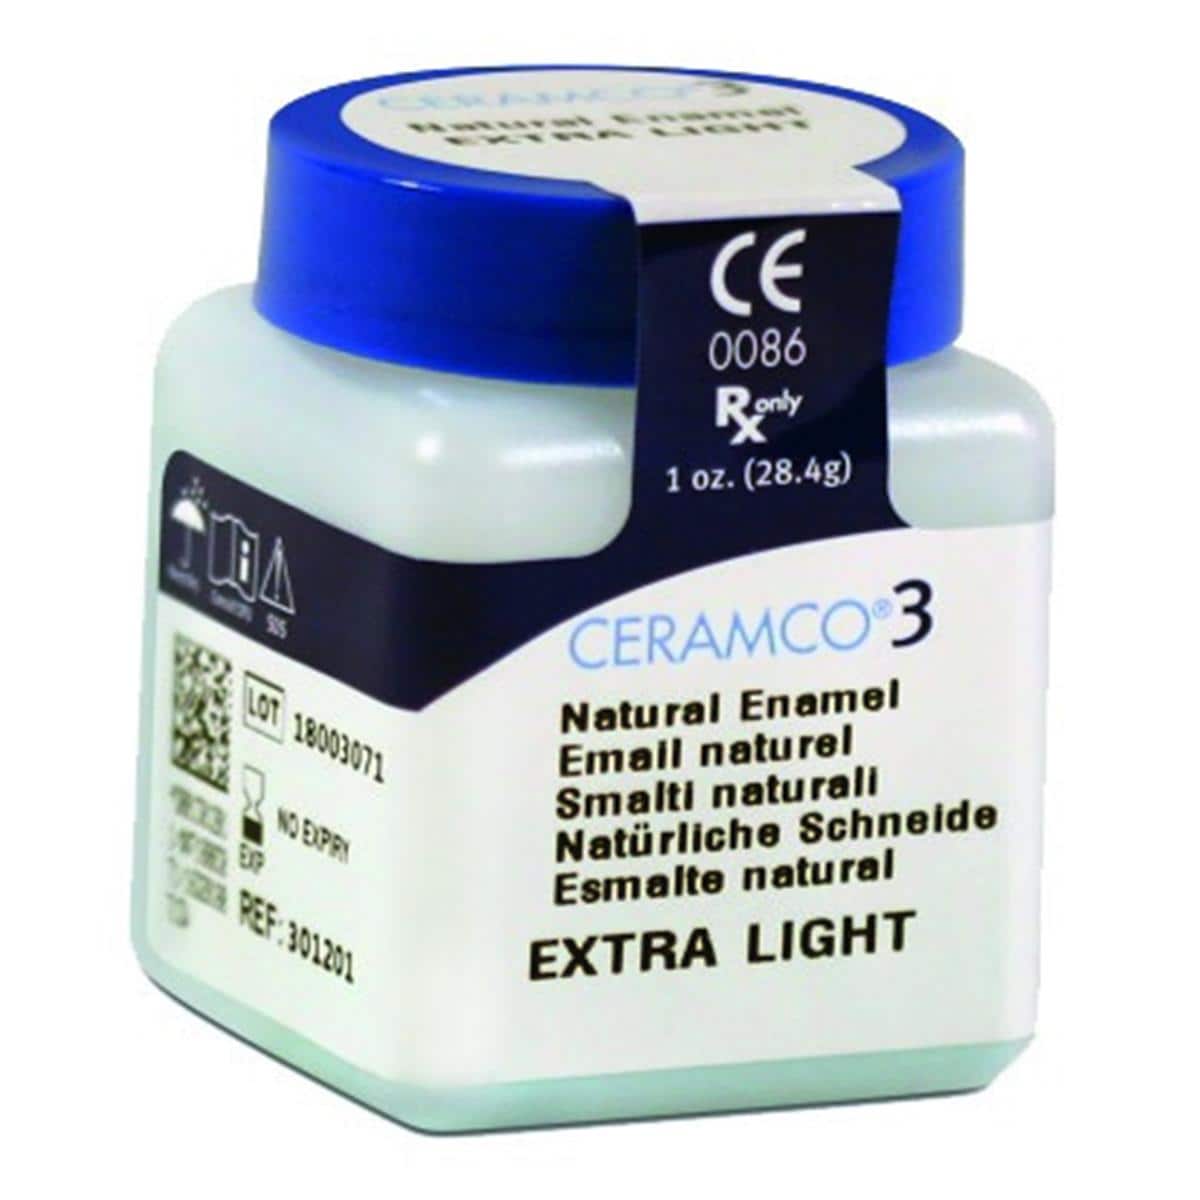 Ceramco 3 UGIN'DENTAIRE - Natural Enamel - Blanc - Le pot de 28,4 g